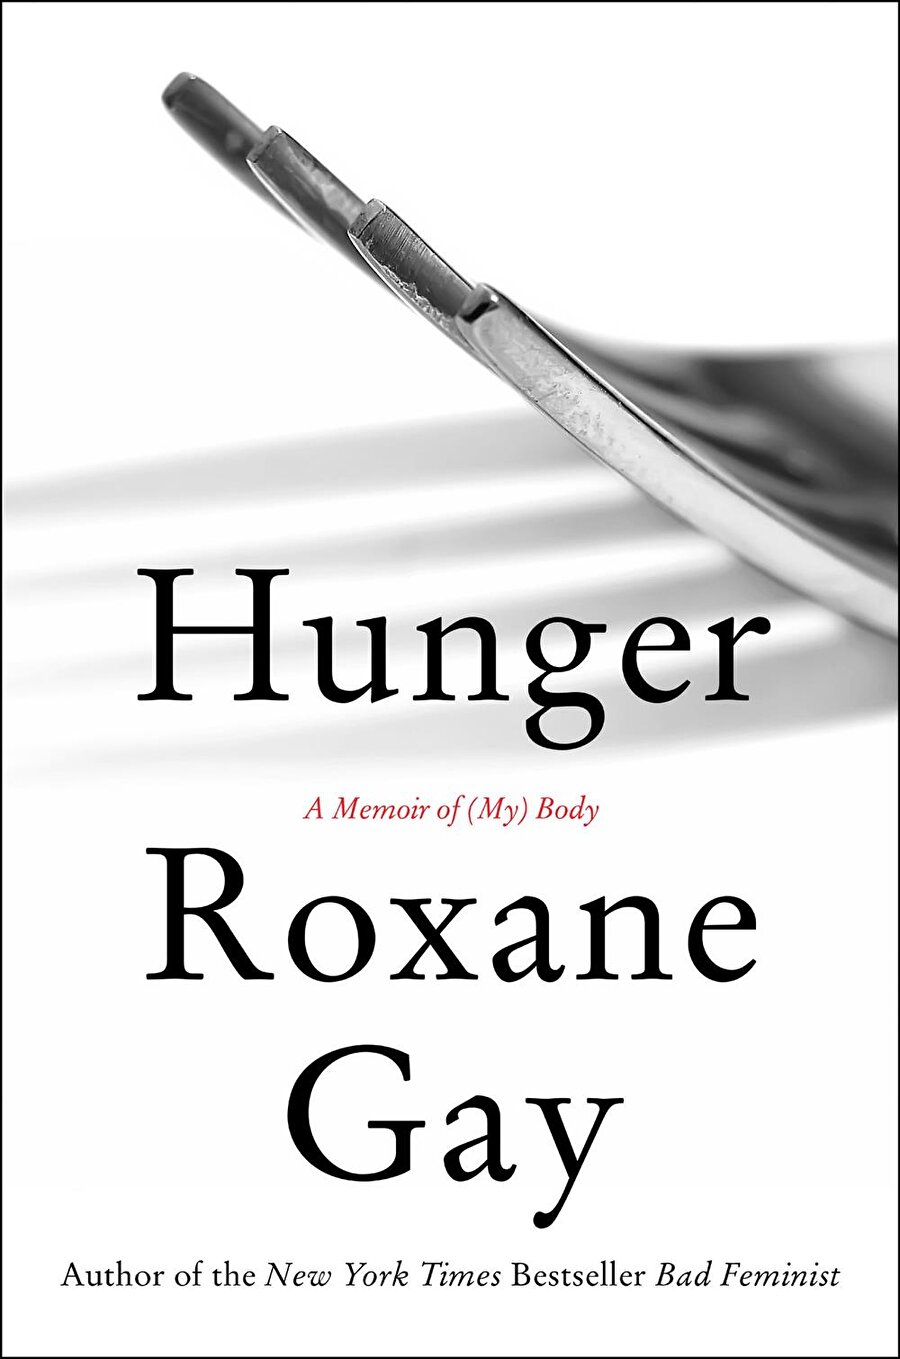 Roxane Gay
"Hunger: A Memoir of (My) Body"